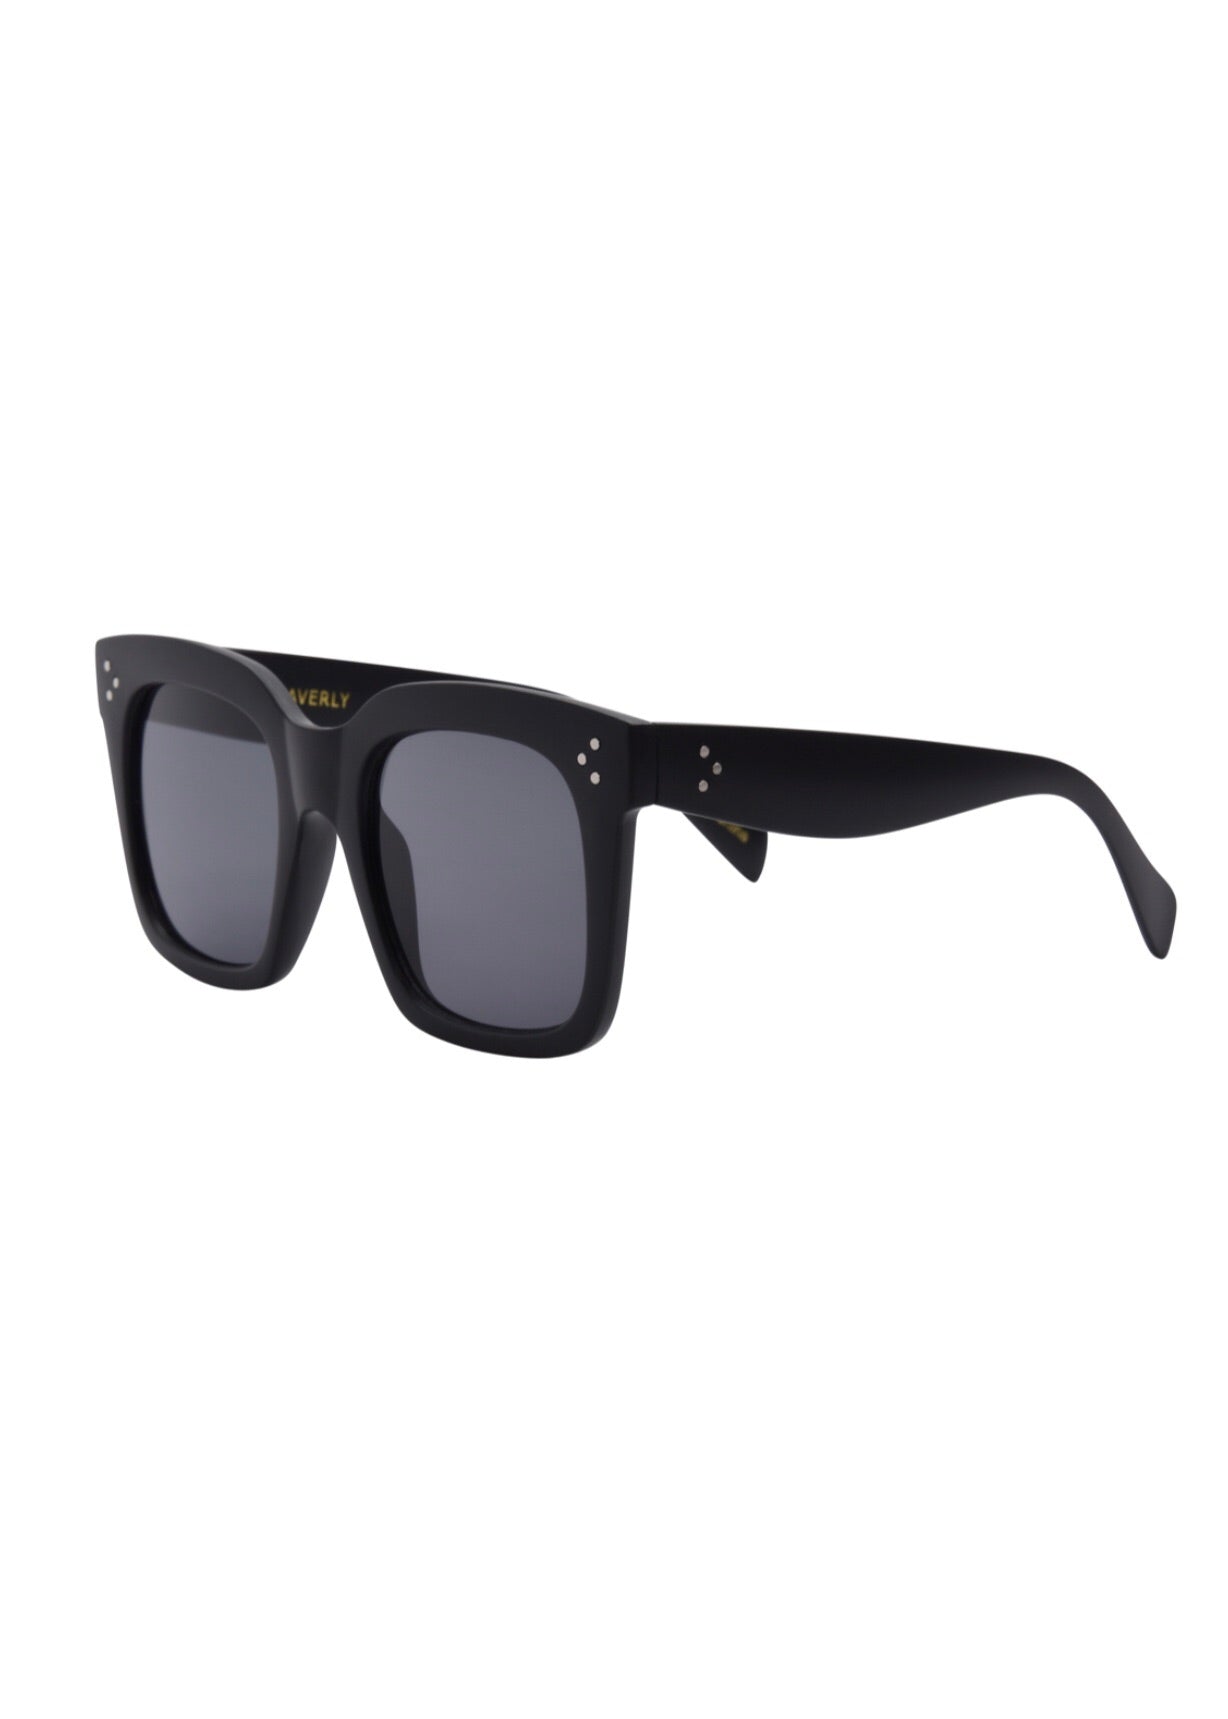 OC Boutique Waverly black sunglasses Isea 2